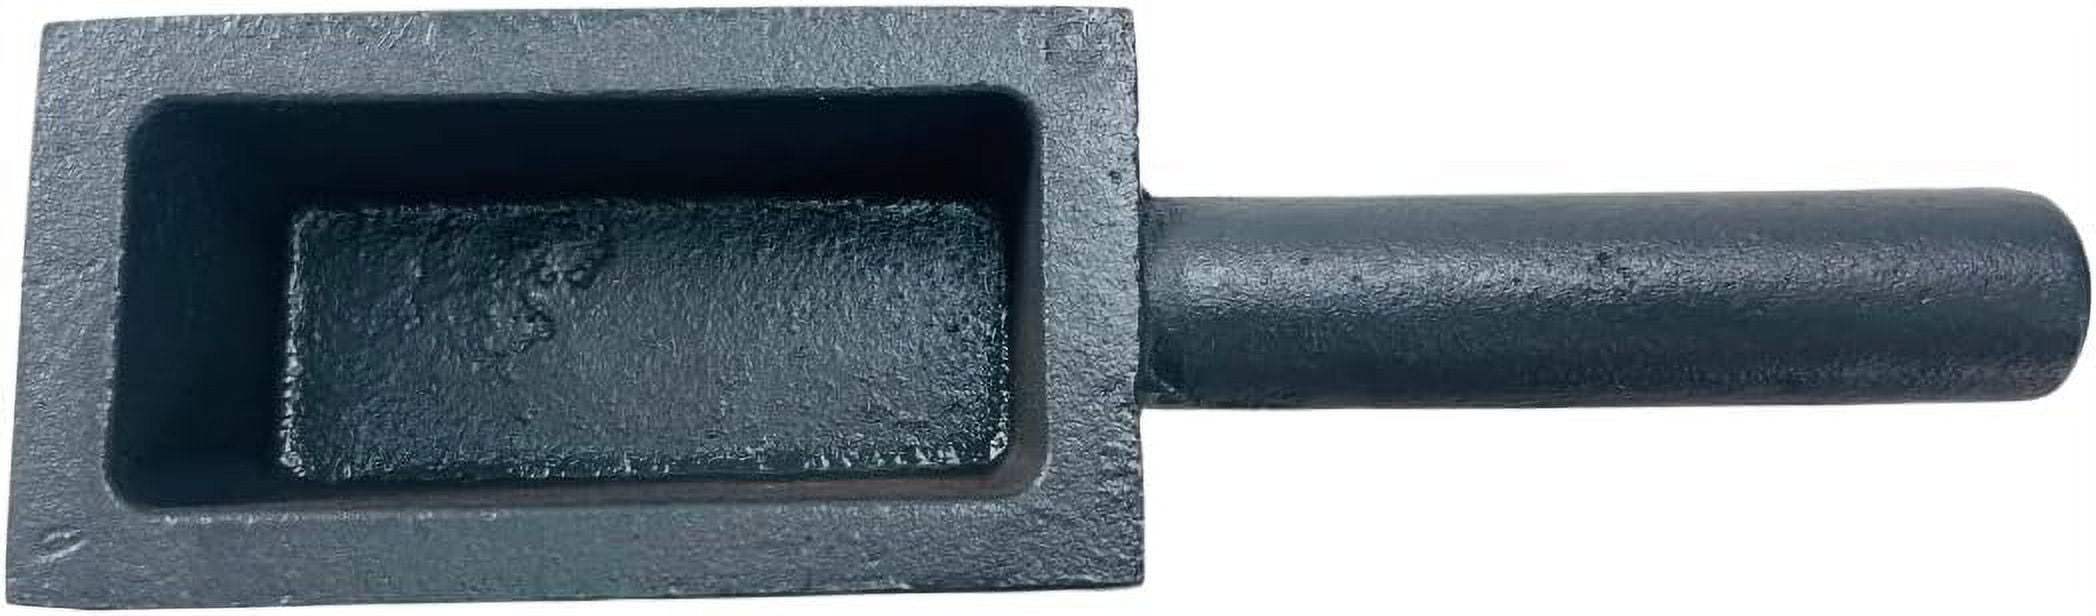 Jewel Tool 1 kg Open Cast Ingot Mold Smelting of Non-Ferrous Metals Such As Gold, Silver, Copper, Aluminum, Size: 1 Kilogram